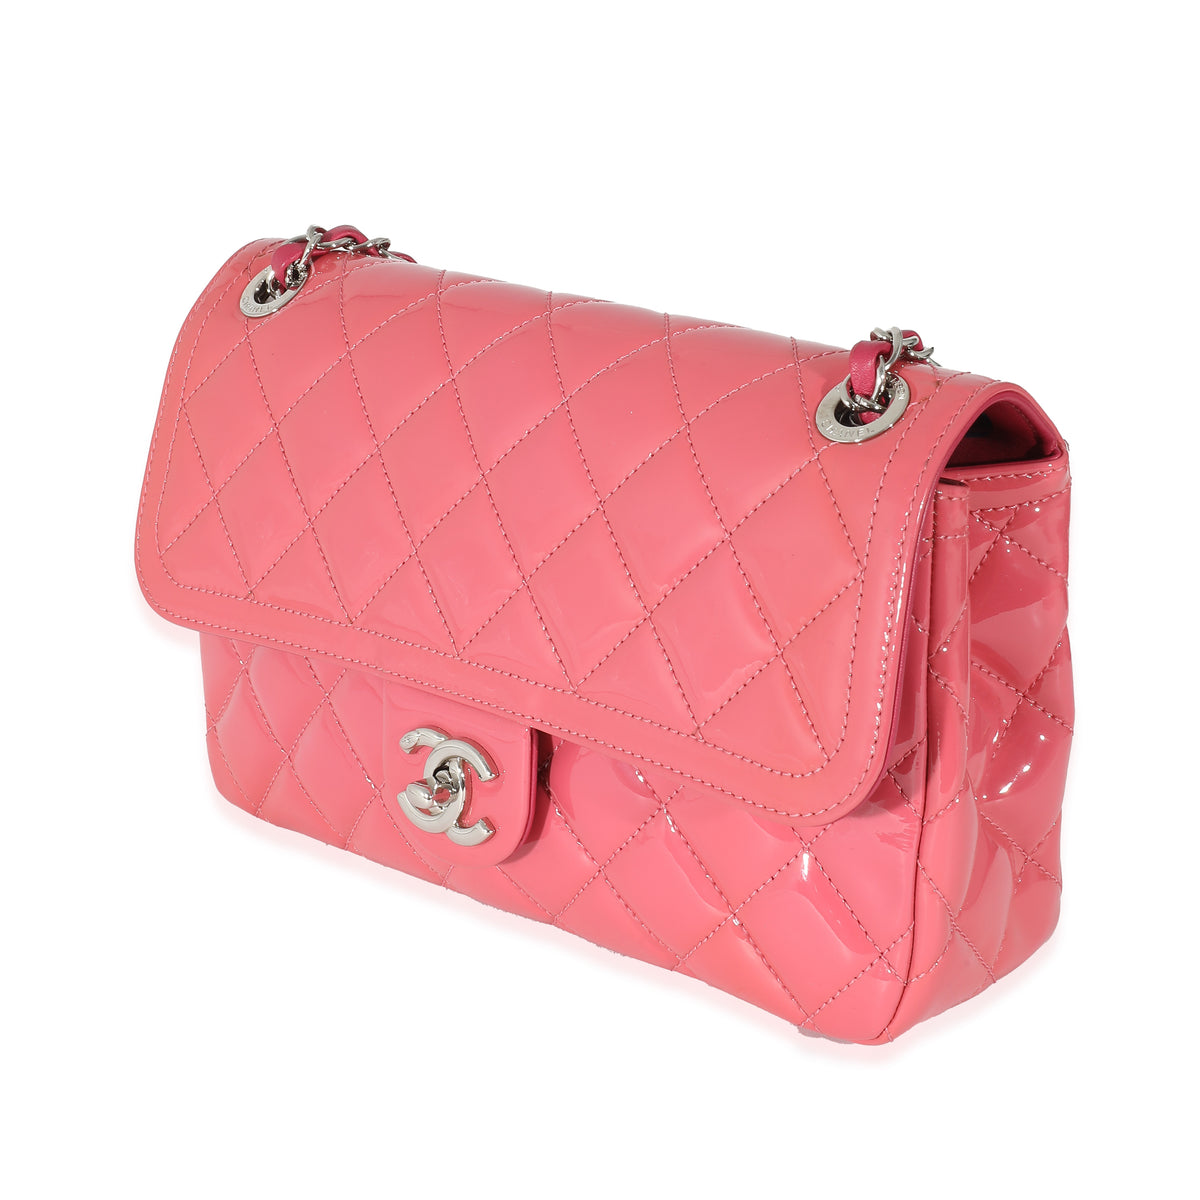 Chanel Patent Coco Shine Small Flap Bag